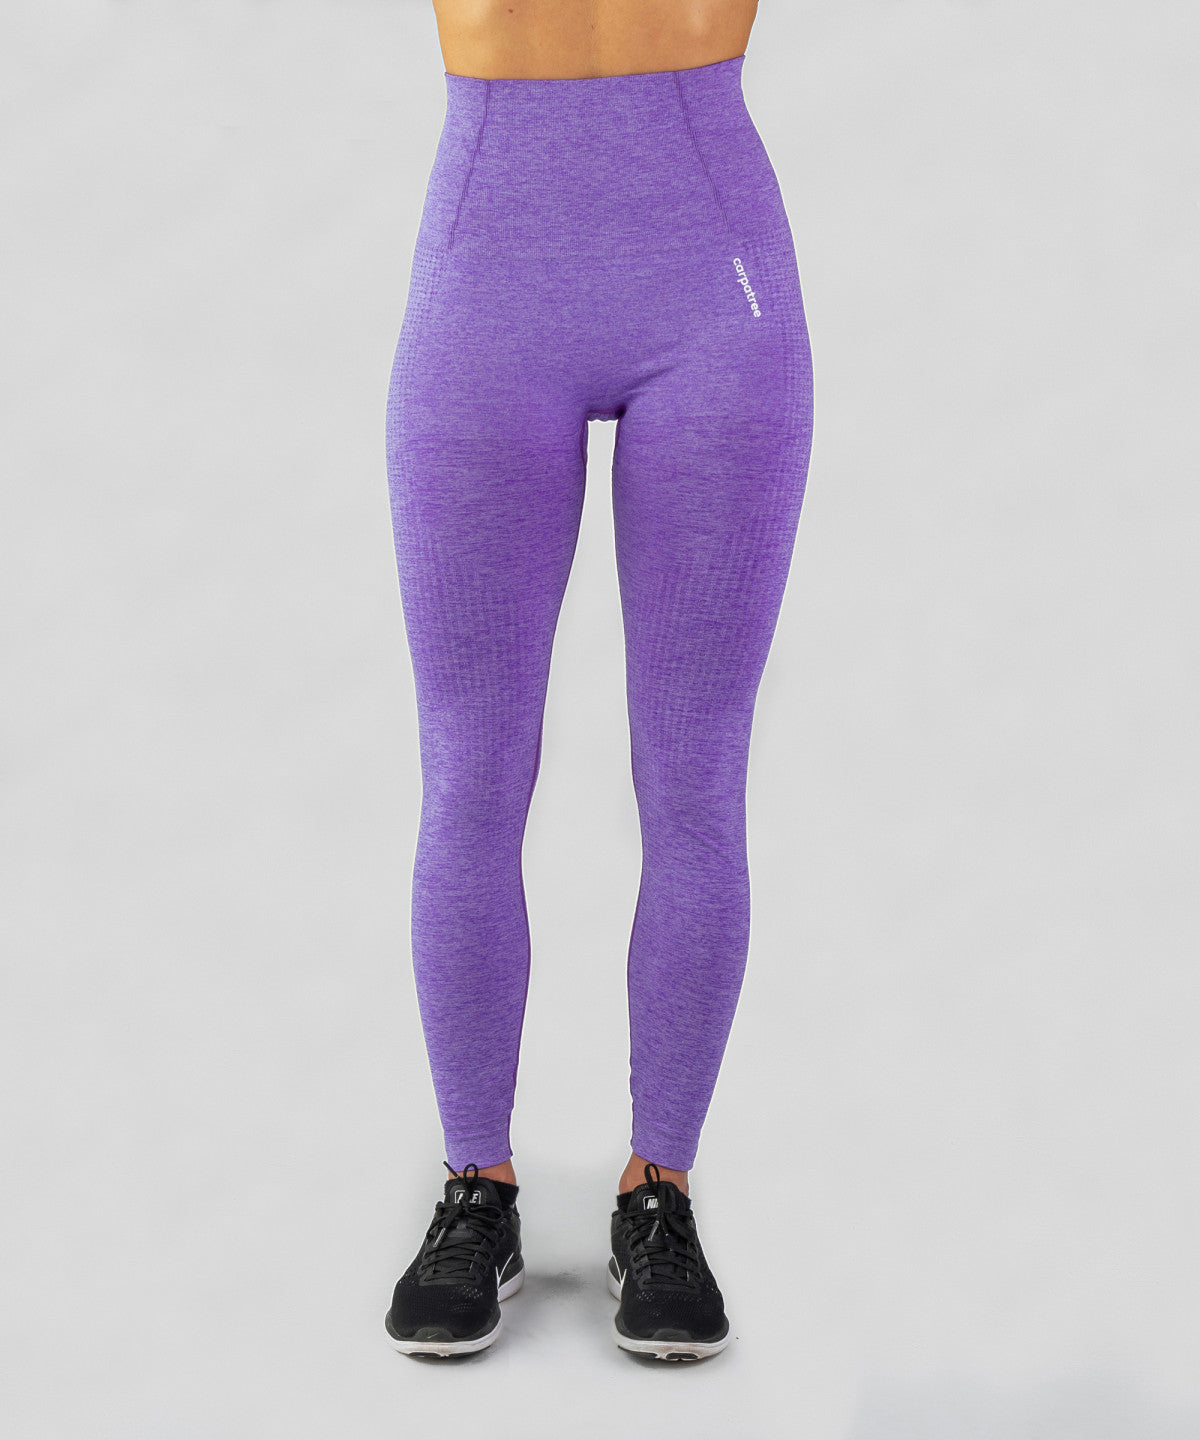 Carpatree Model One Seamless Leggings - purple high waisted activewear sports leggings